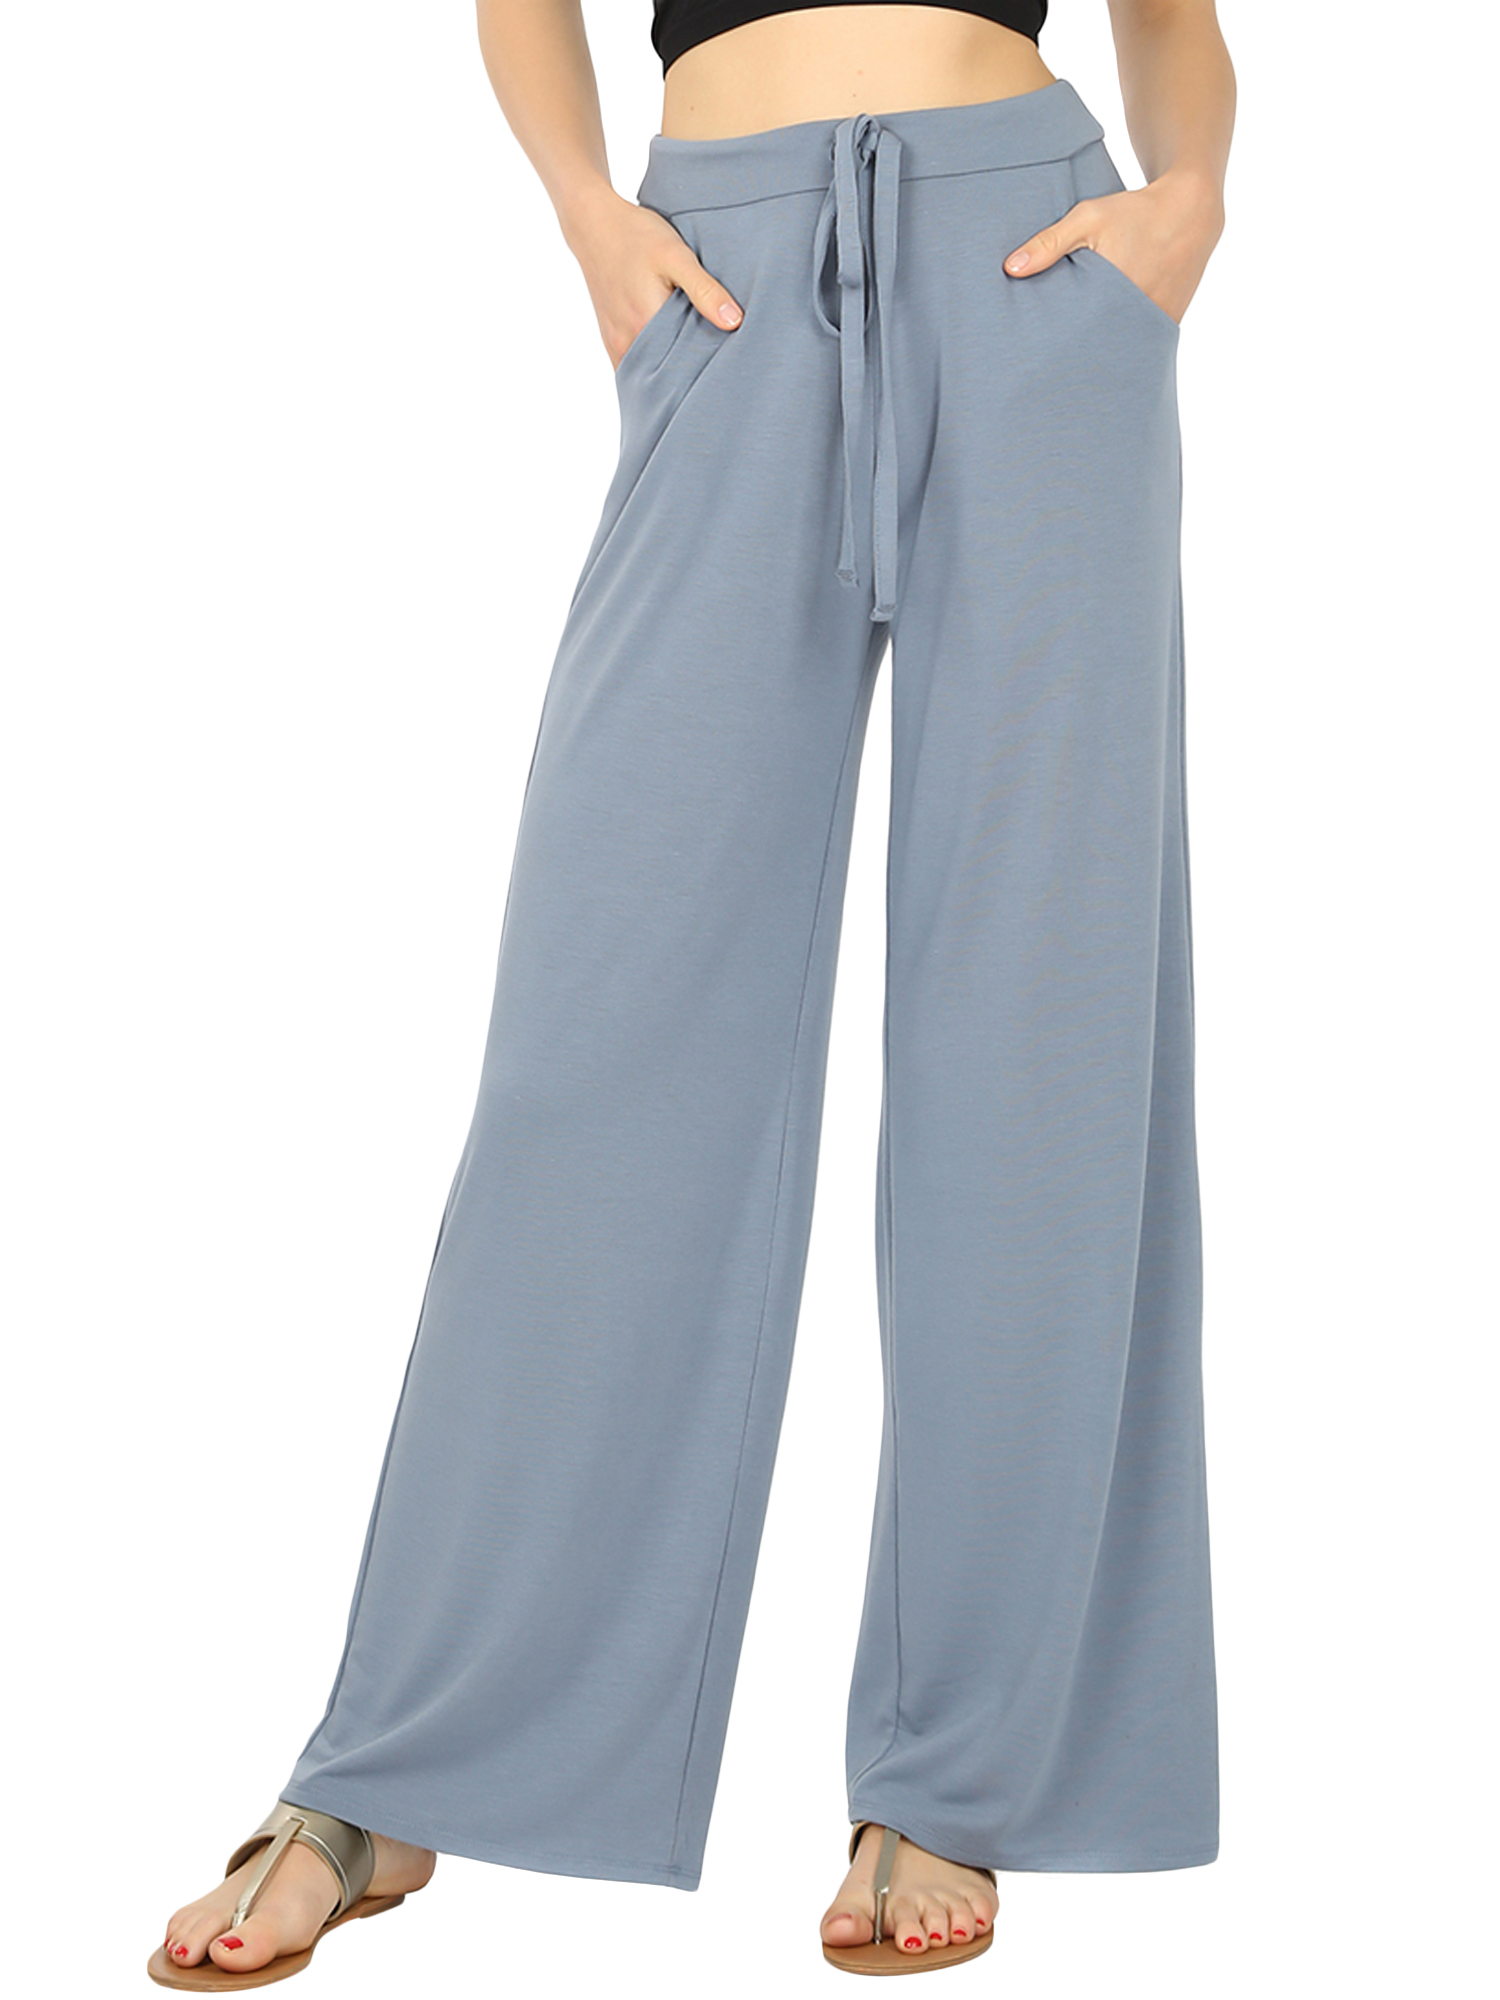 NACHILA Womens Bamboo Pajamas Pants Wide Leg Lounge Bottoms Soft Yoga Sweatpants Drawstring Casual Workout Pants S-4XL